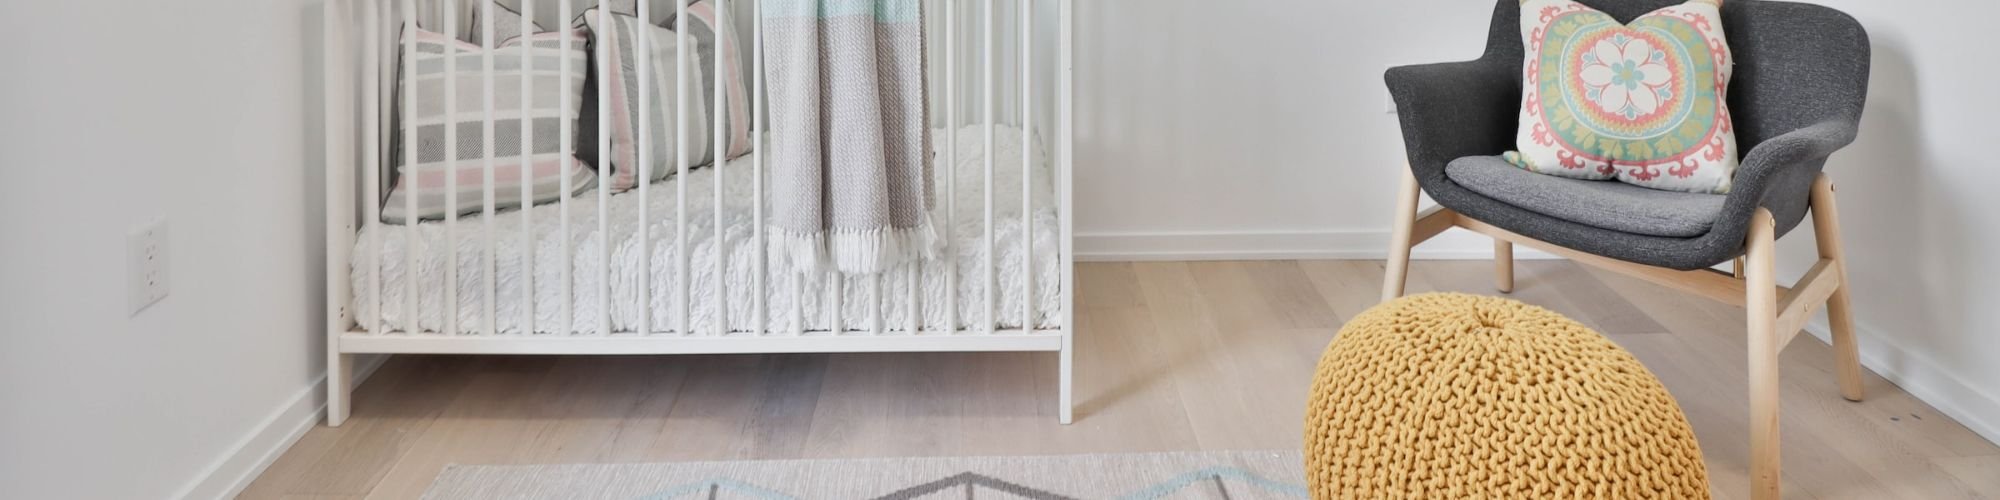 Nursery with luxury vinyl flooring